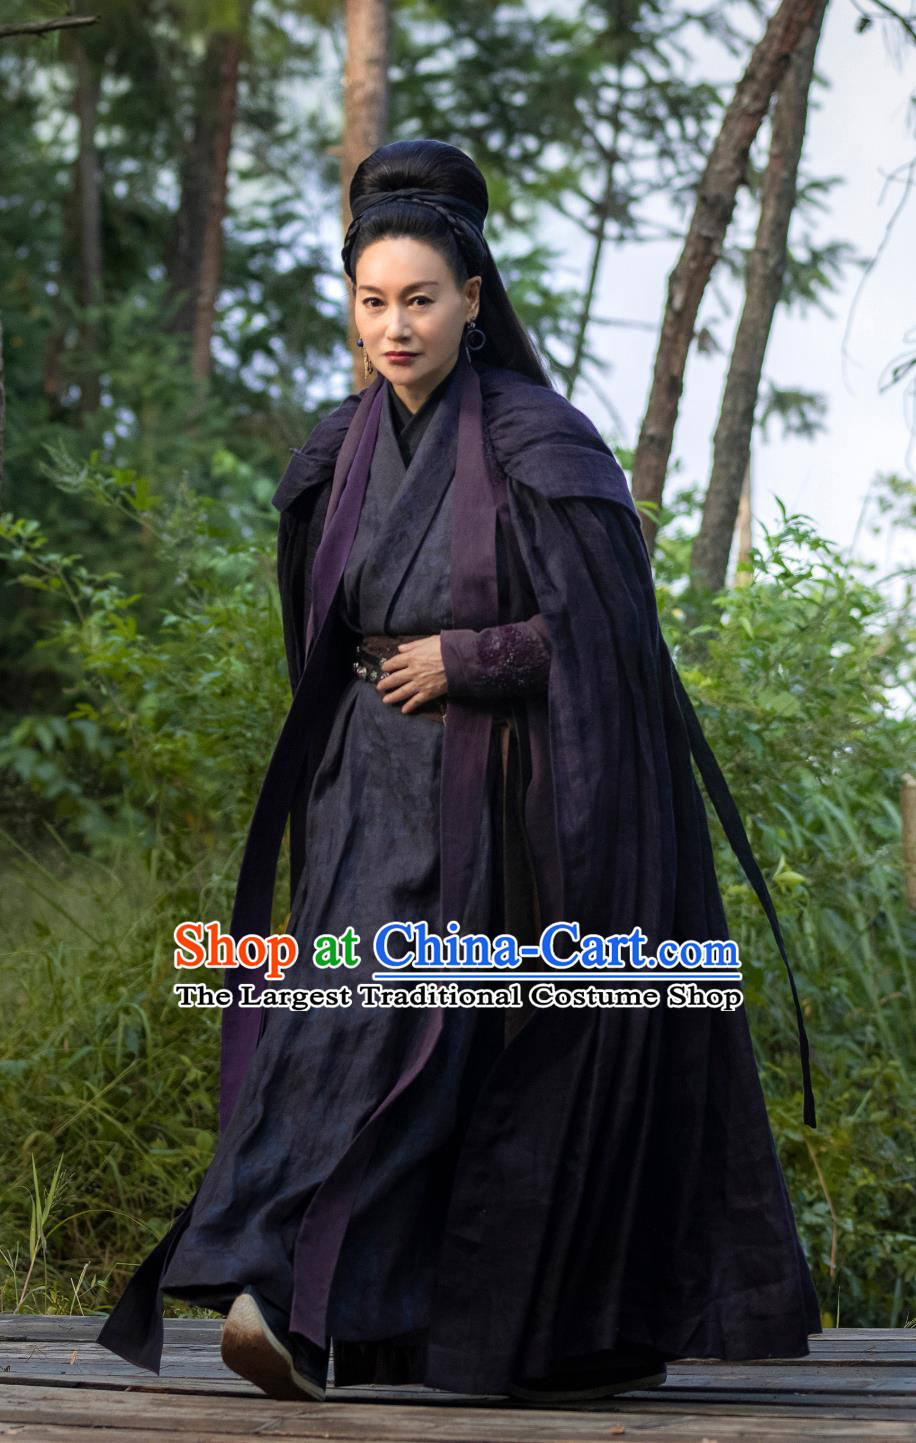 China Ancient Super Heroine Clothing TV Drama The Ingenious One Chiefess Kou Yan Garment Costumes